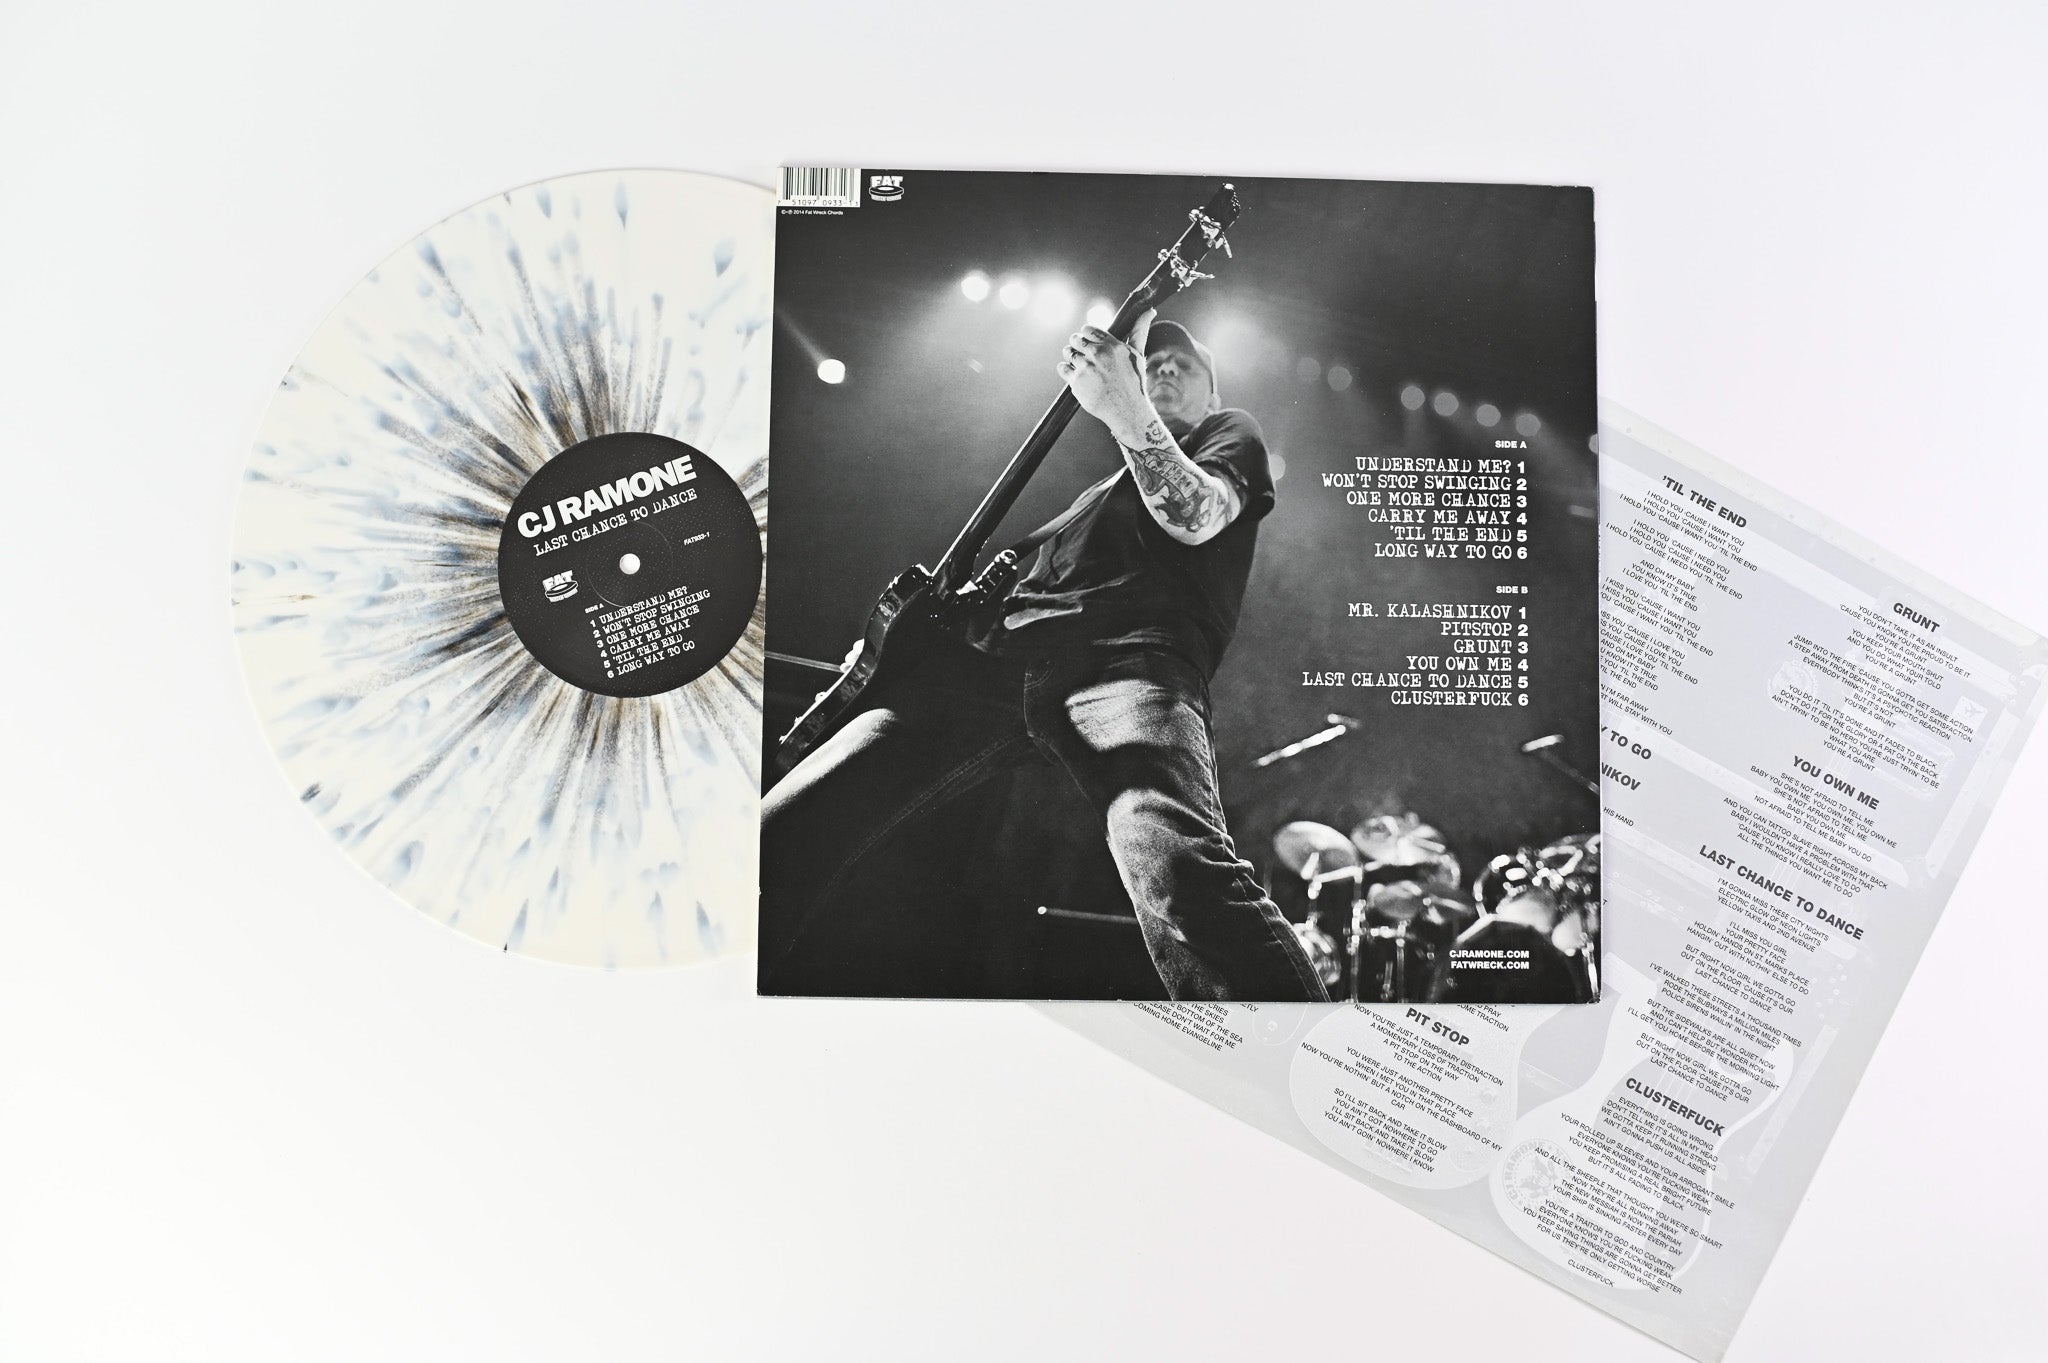 C.J. Ramone - Last Chance To Dance on Fat Wreck Chords White w/Black Splatter Vinyl